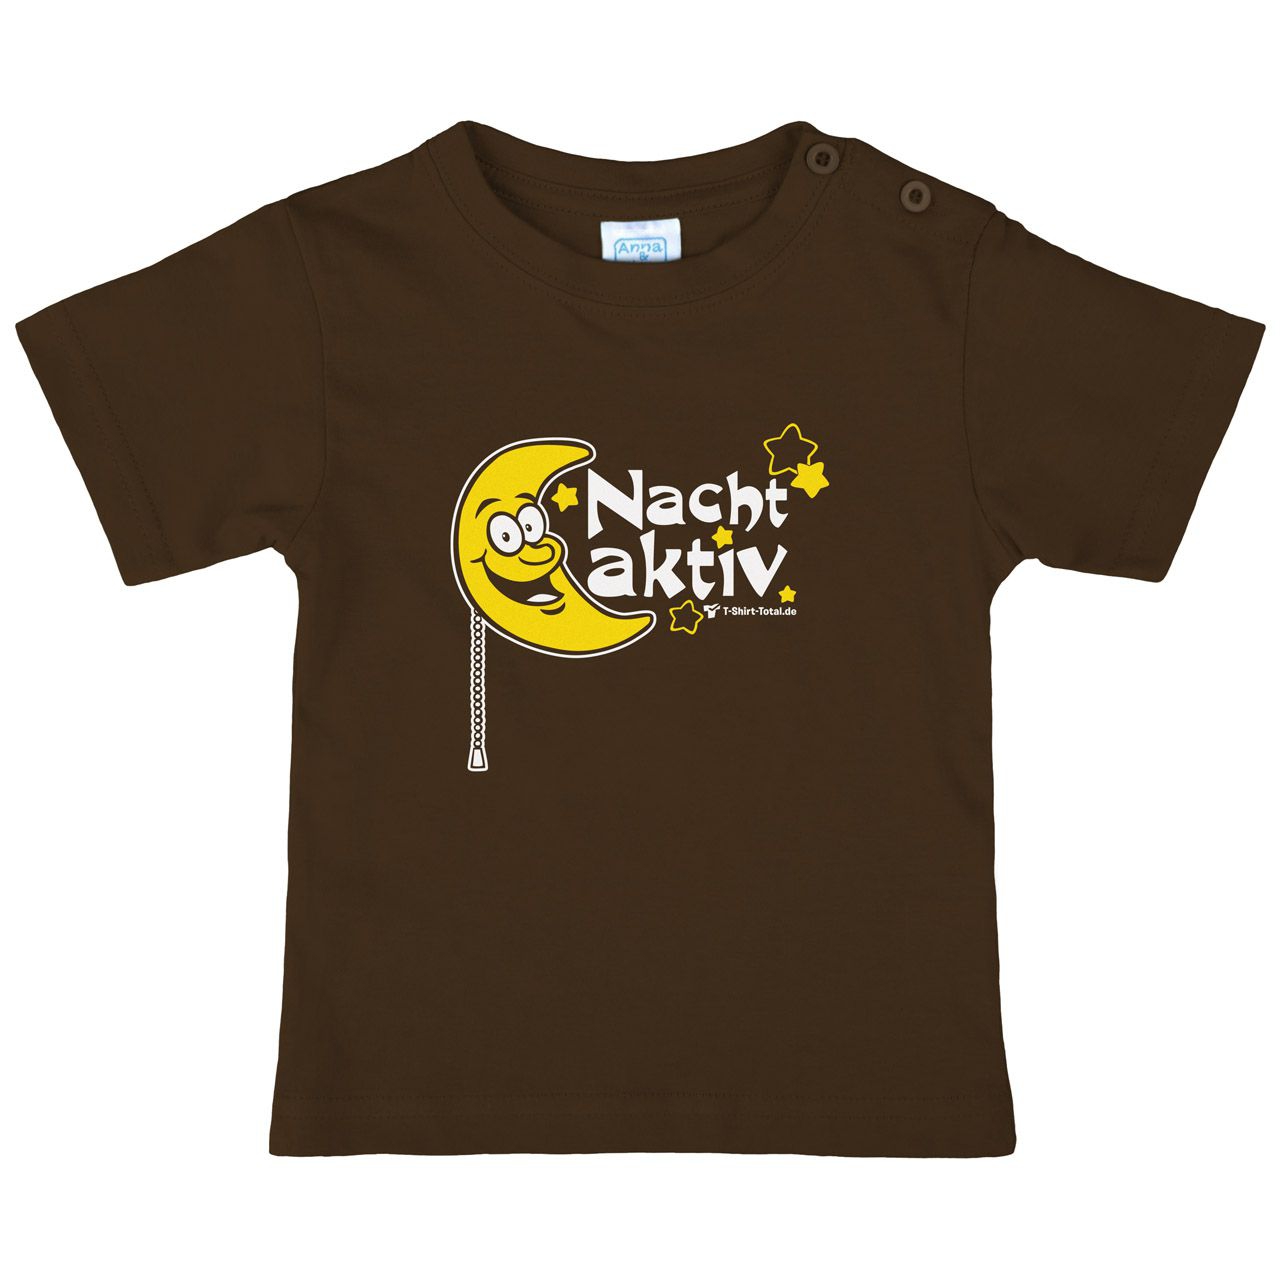 Nachtaktiv Mond Kinder T-Shirt braun 80 / 86